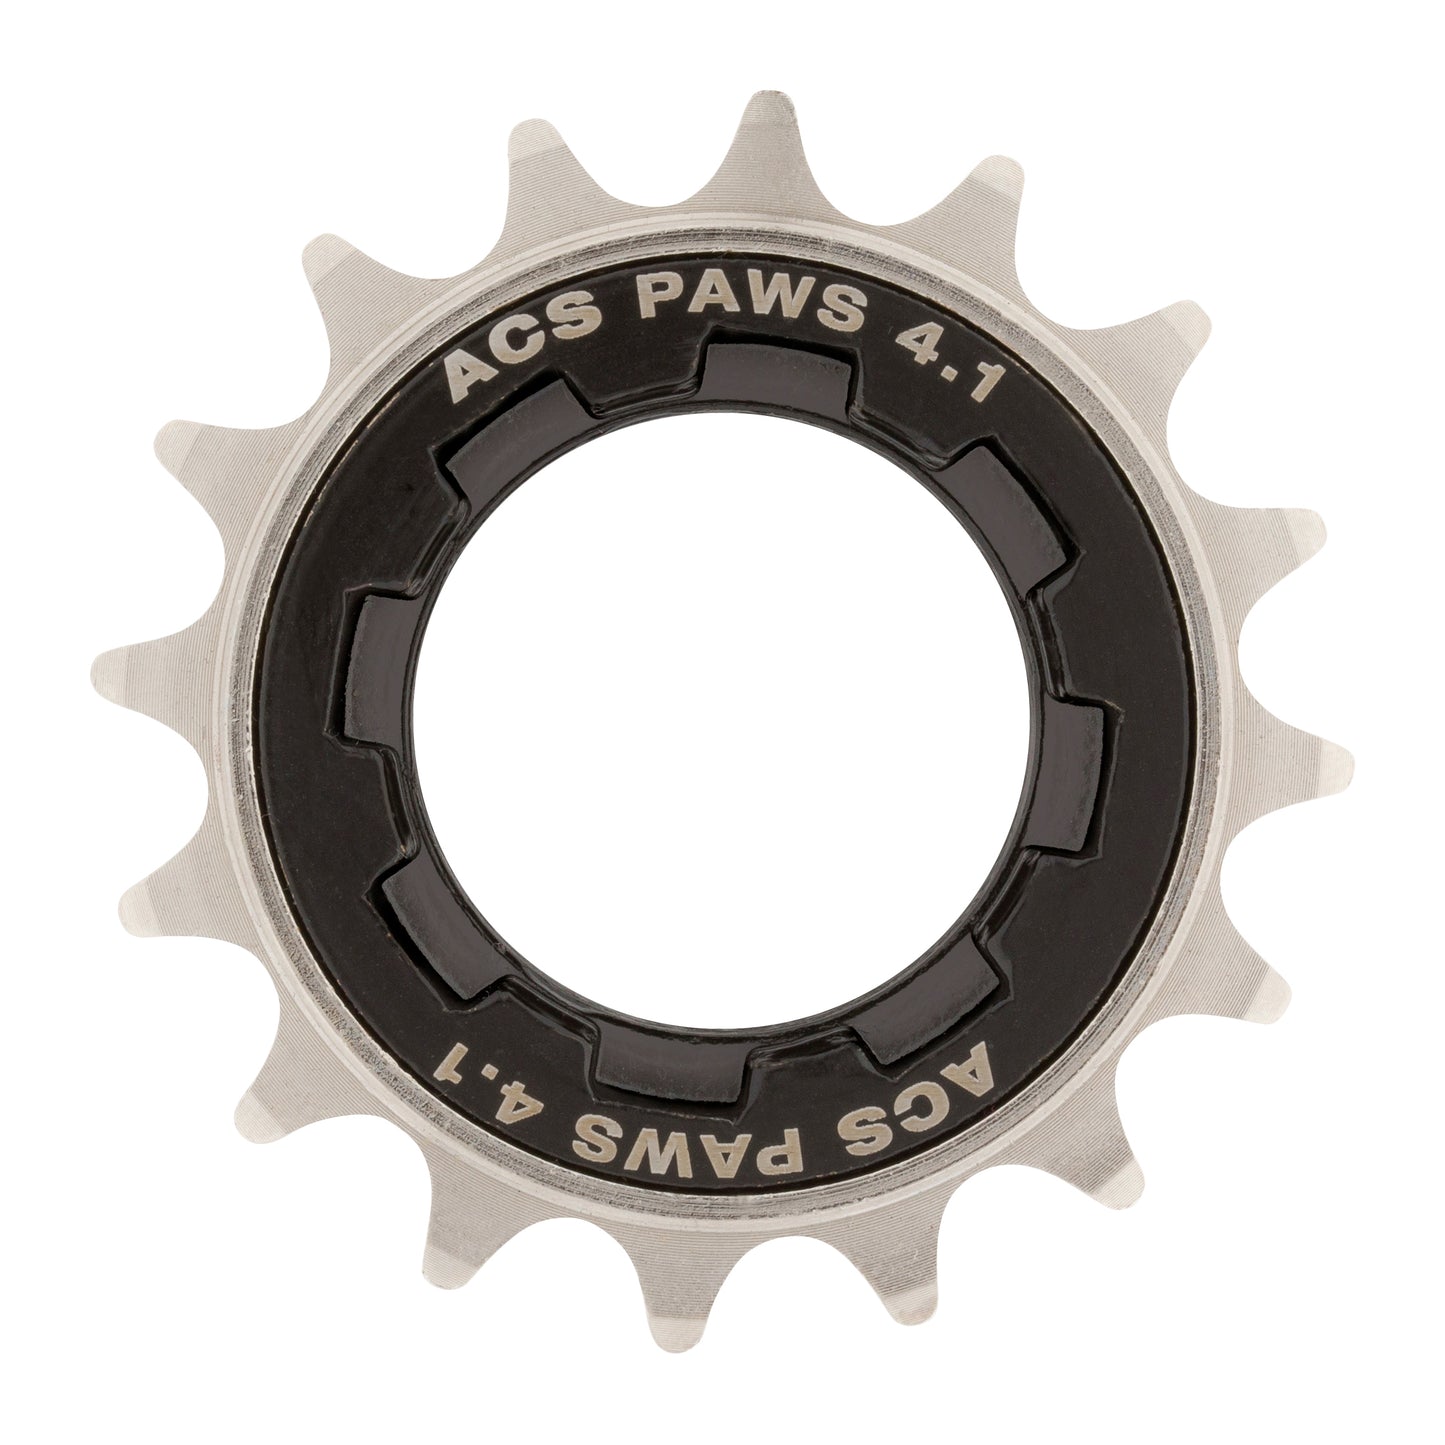 ACS Paws 4.1 Single Speed Freewheels